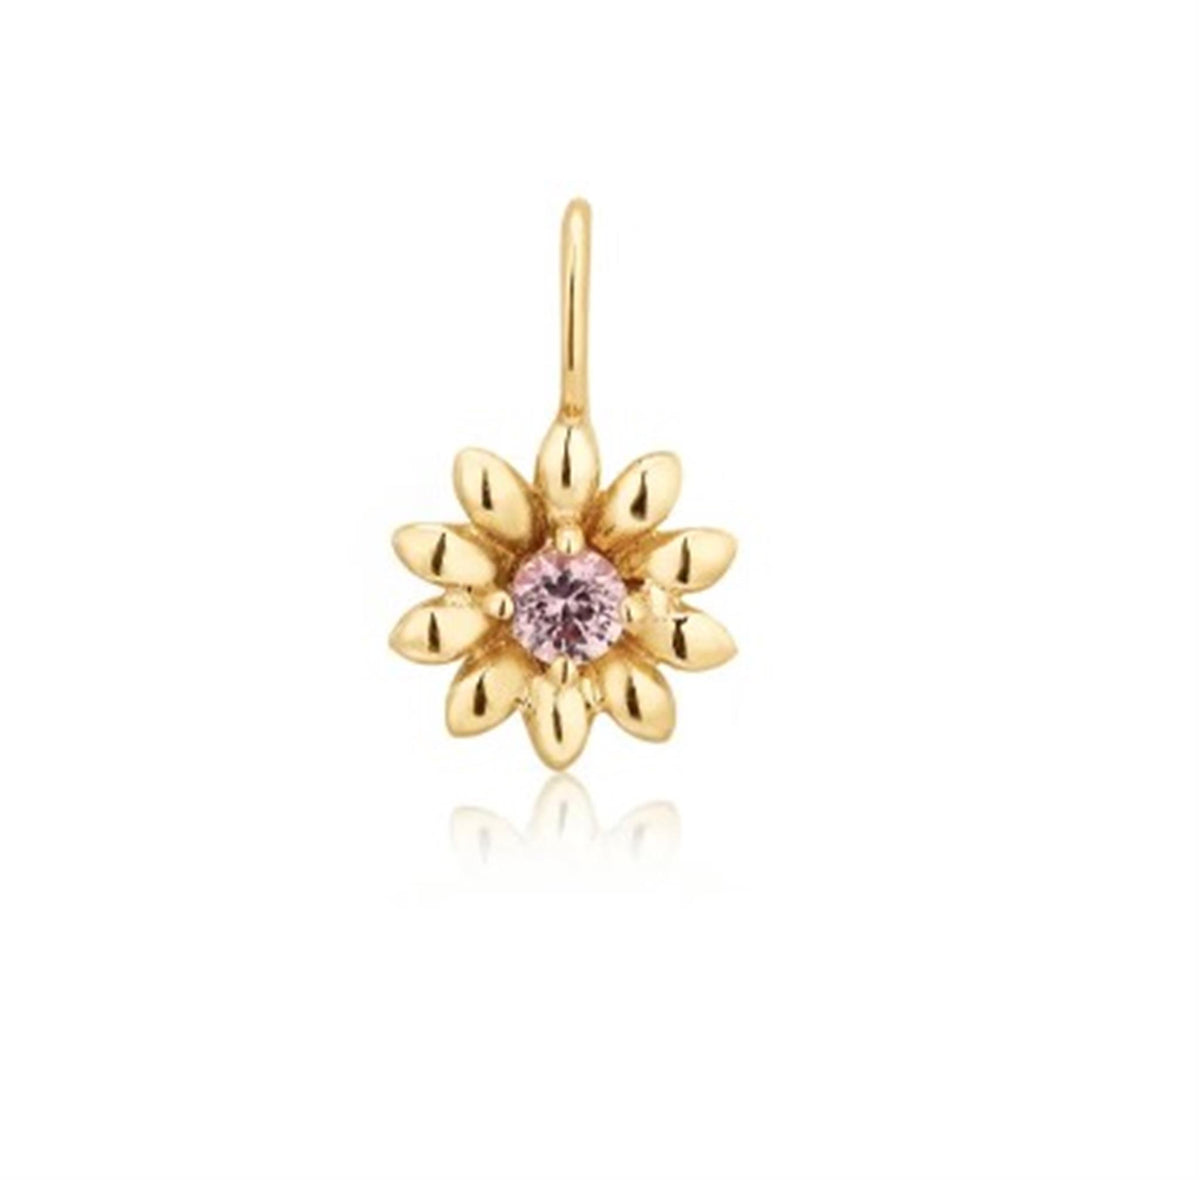 Aurelie Gi 14Kt Yellow Gold Blossom Pink Sapphire Flower Charm